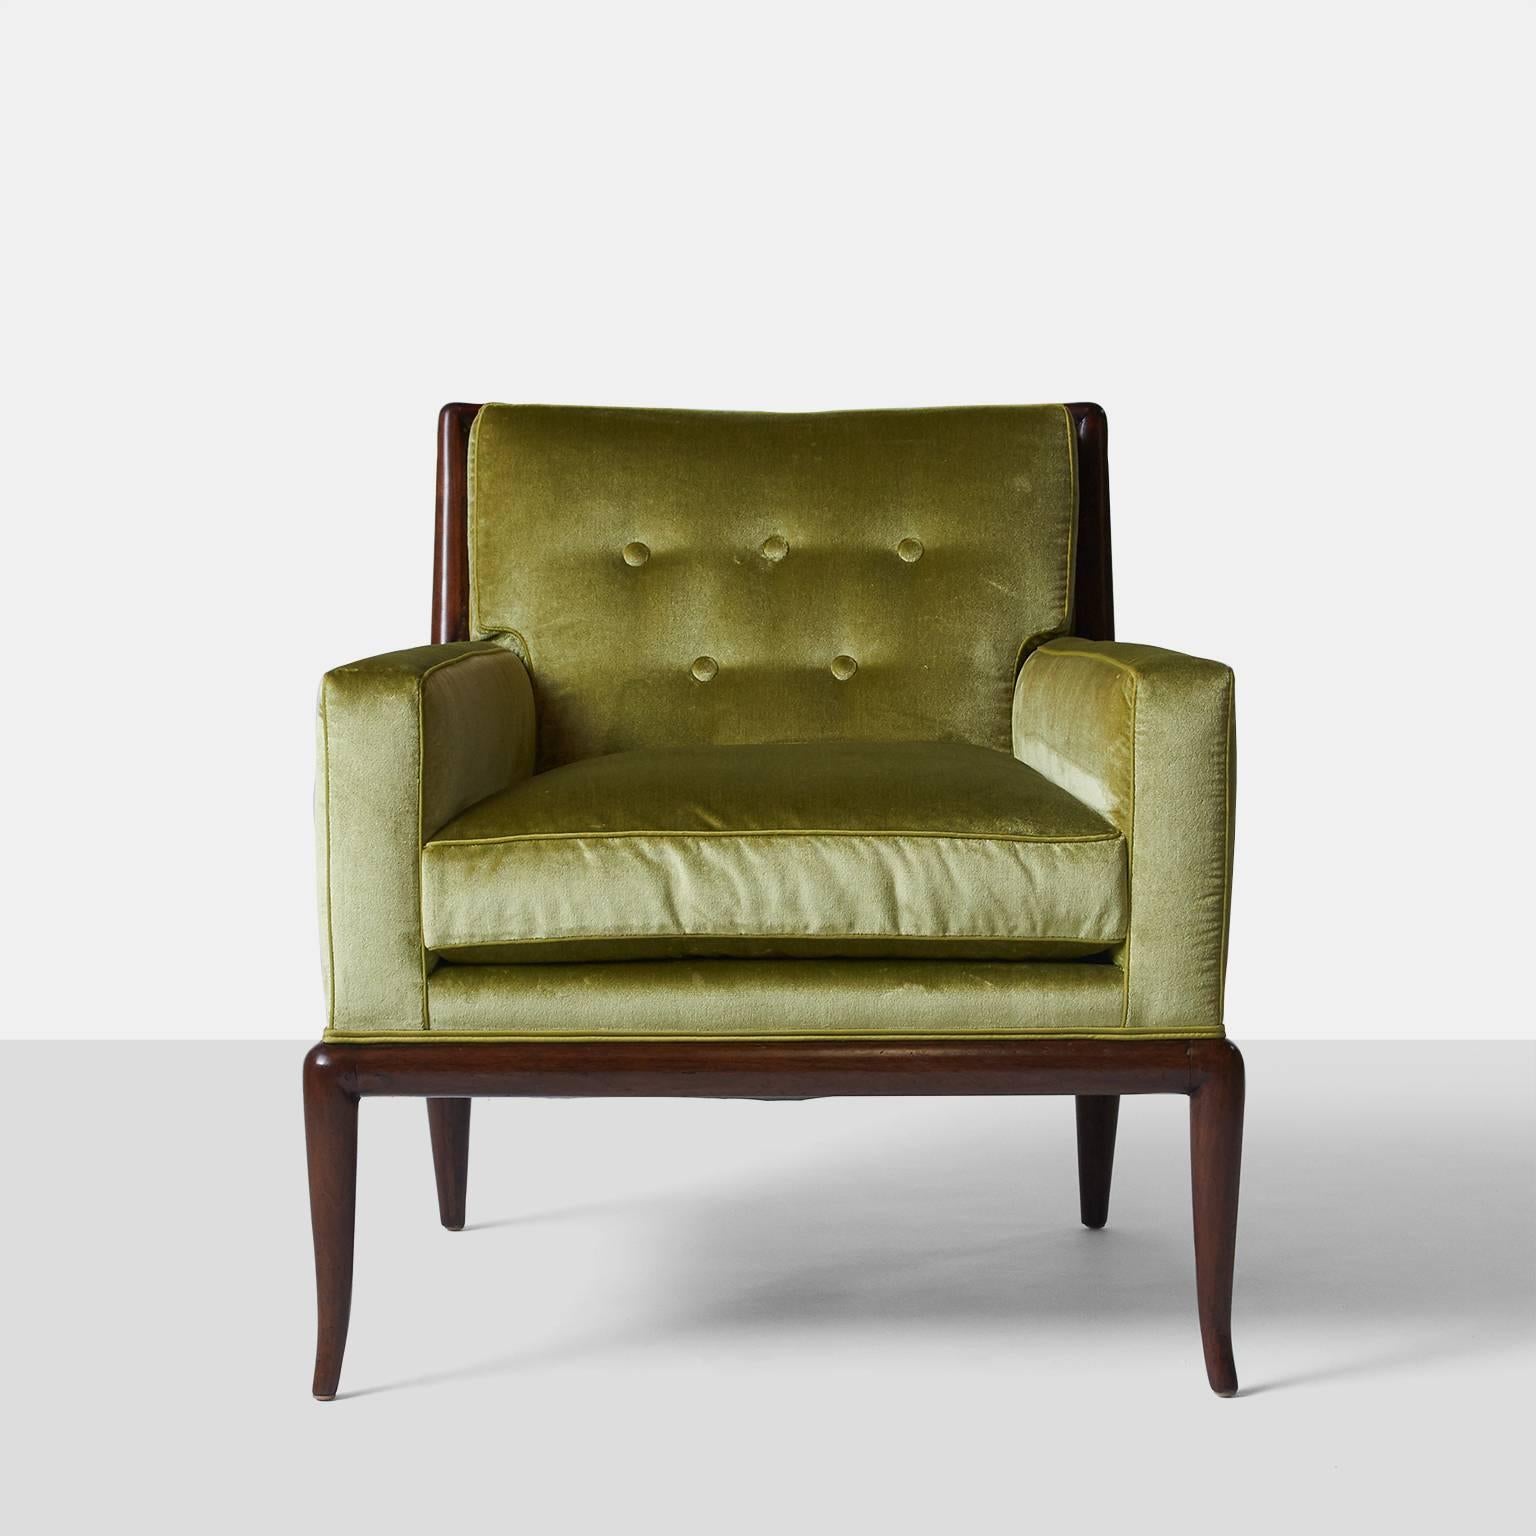 American Lounge Chair and Ottoman by TH Robsjohn-Gibbings